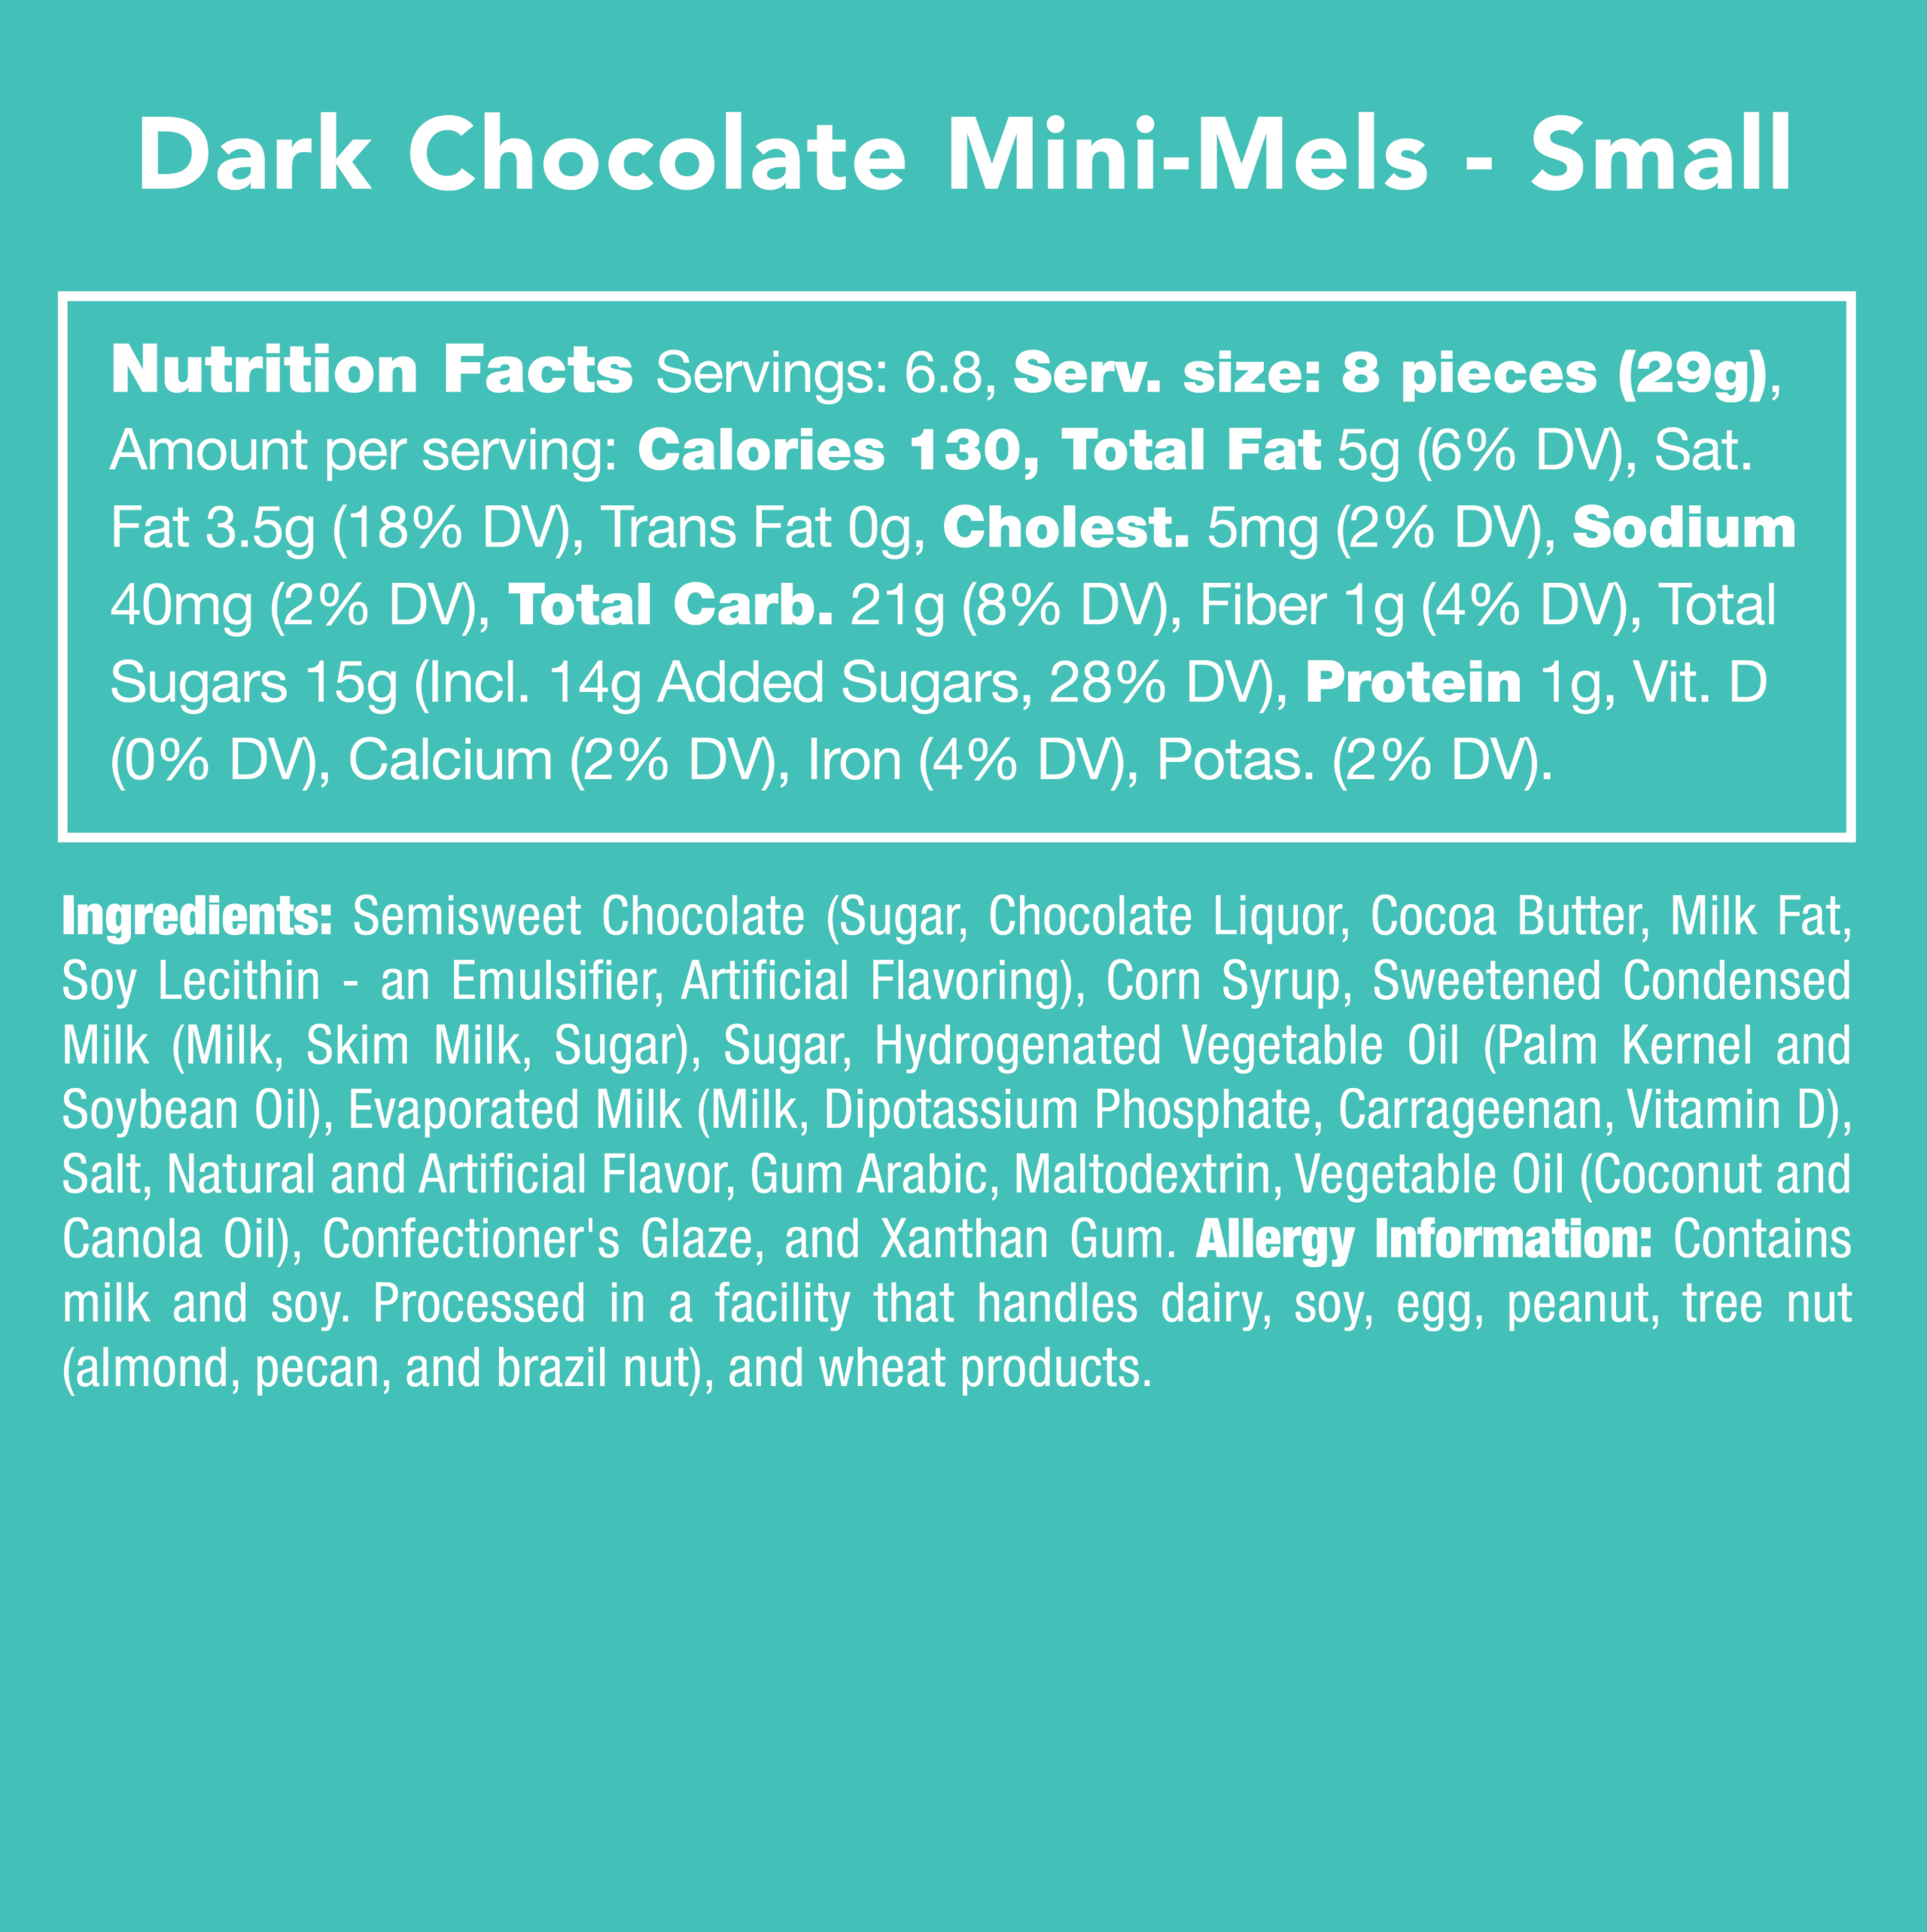 Dark Chocolate Mini-Mels